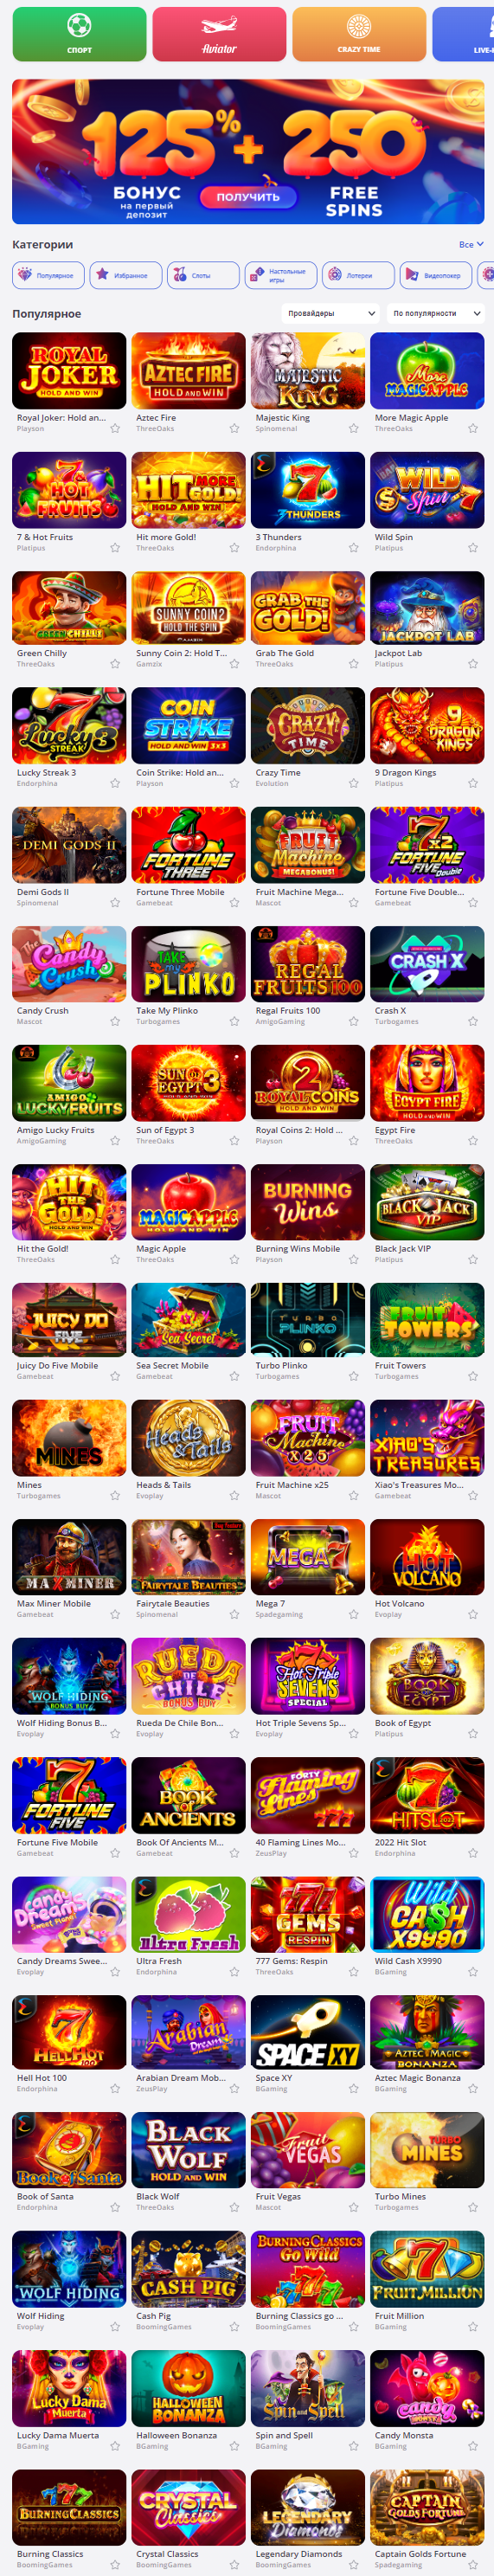 Glory Casino – великолепие азартных игр Узбекистана